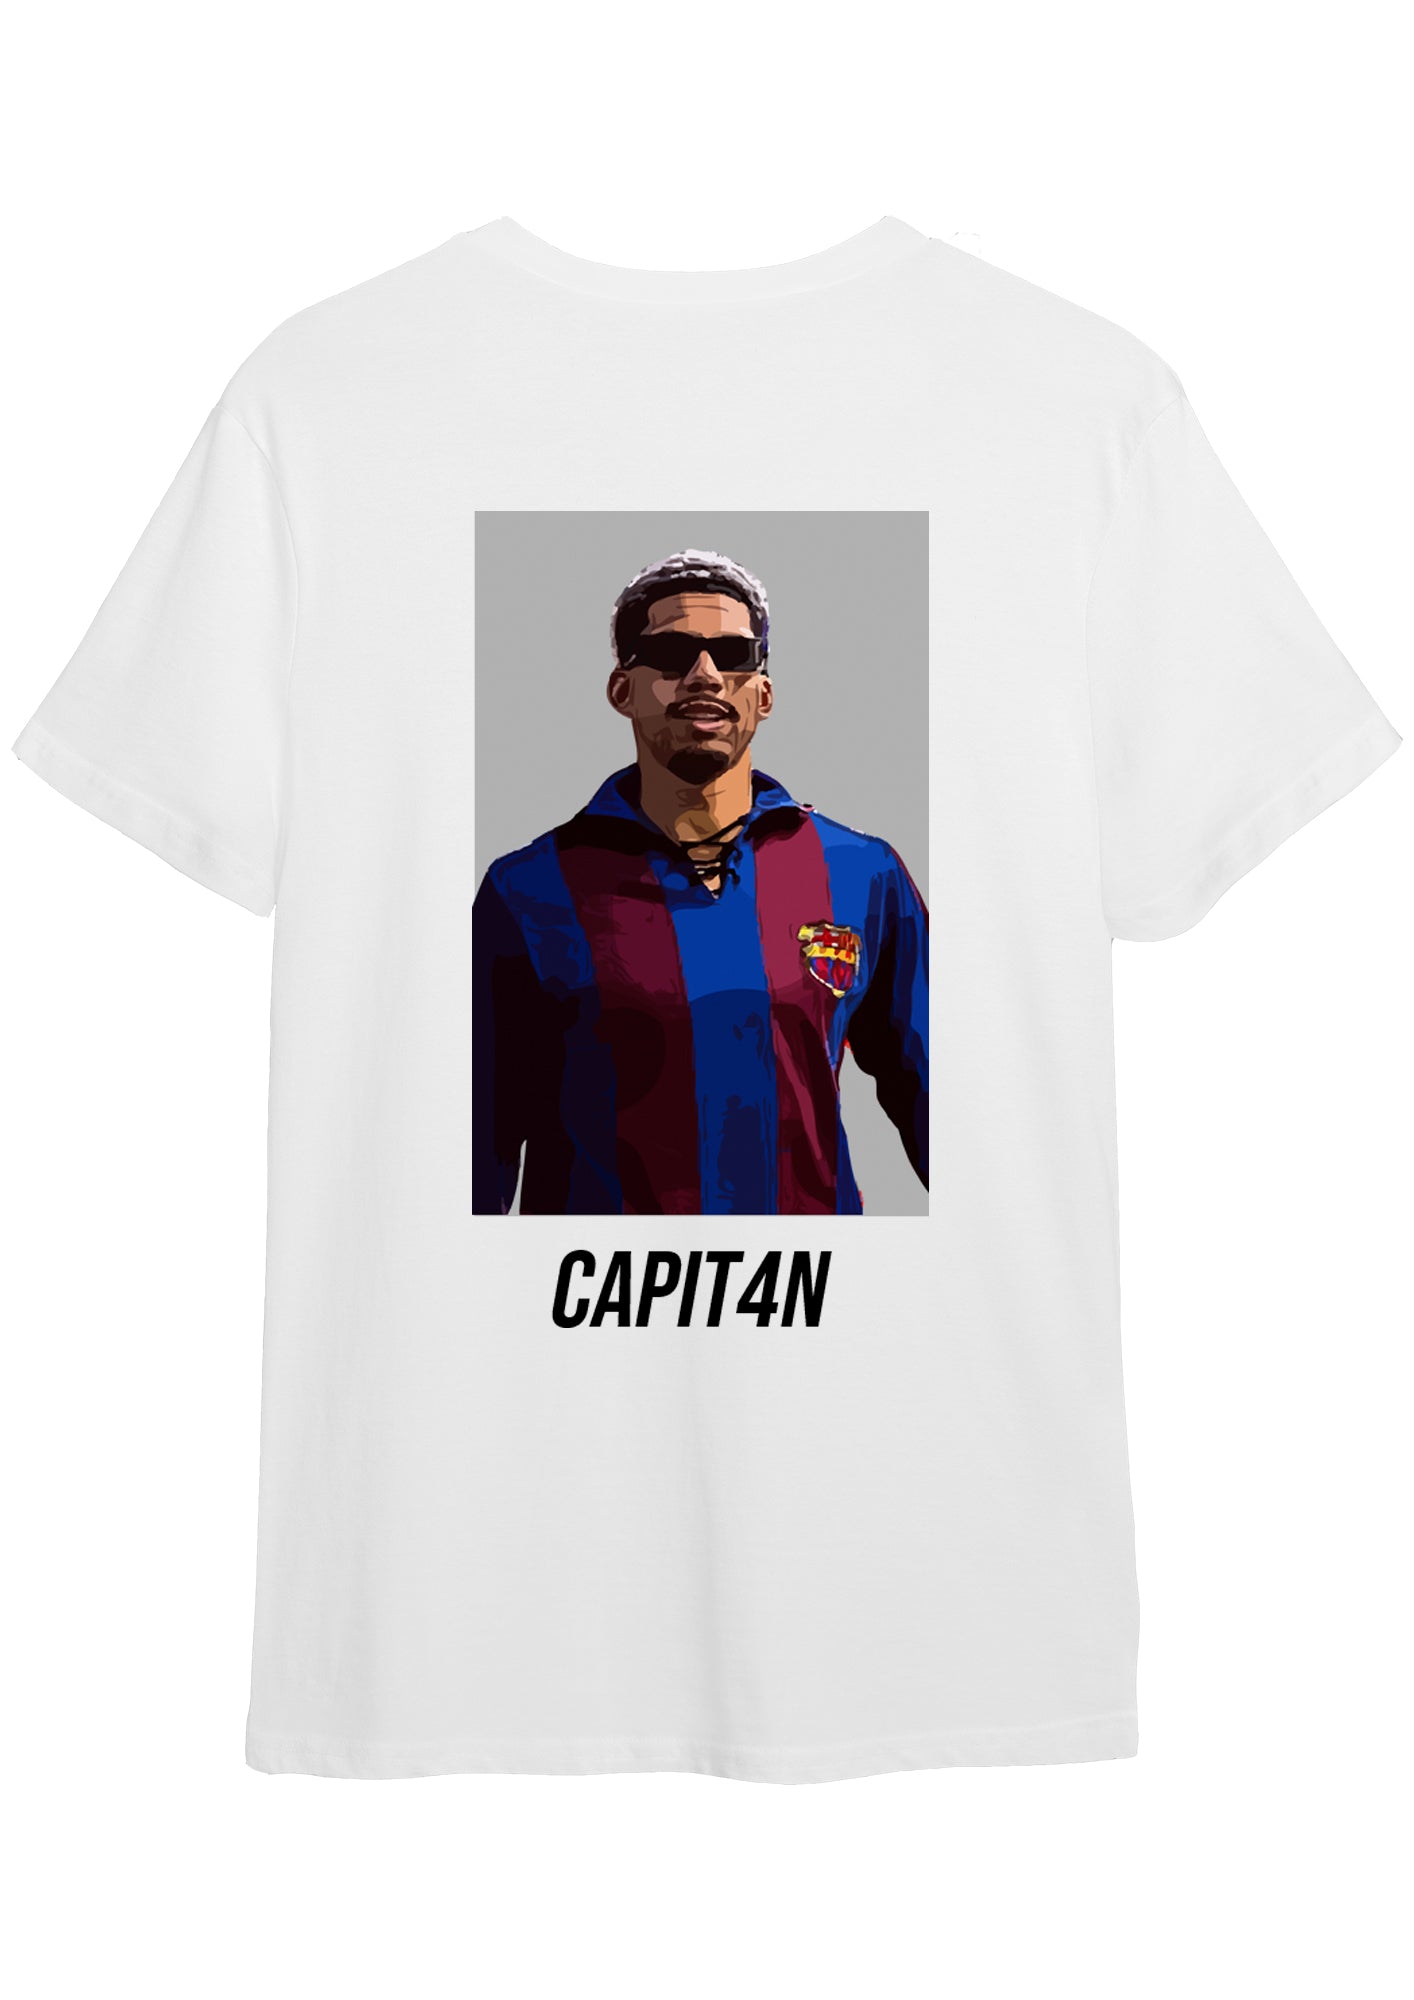 "C4PITAN" T-shirt by Ronald Araujo